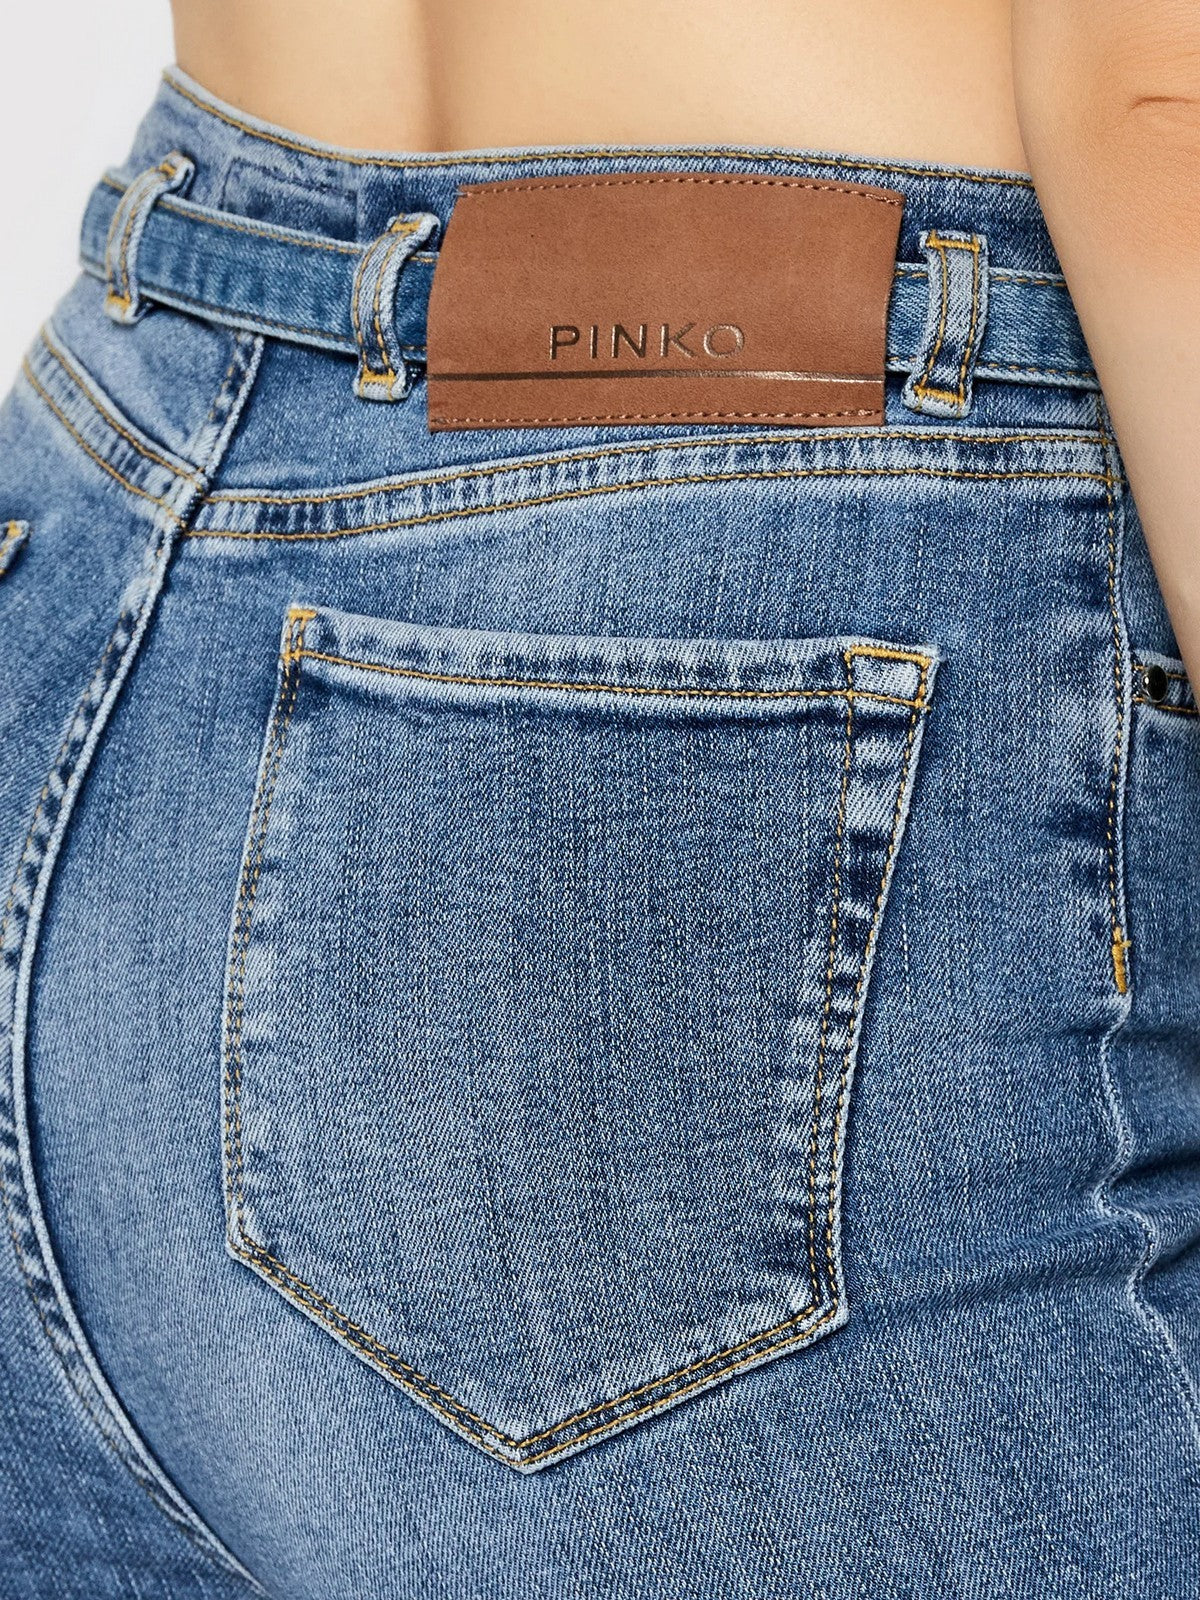 PINKO Jeans Donna  1J10P4 Y78M F15 Blu